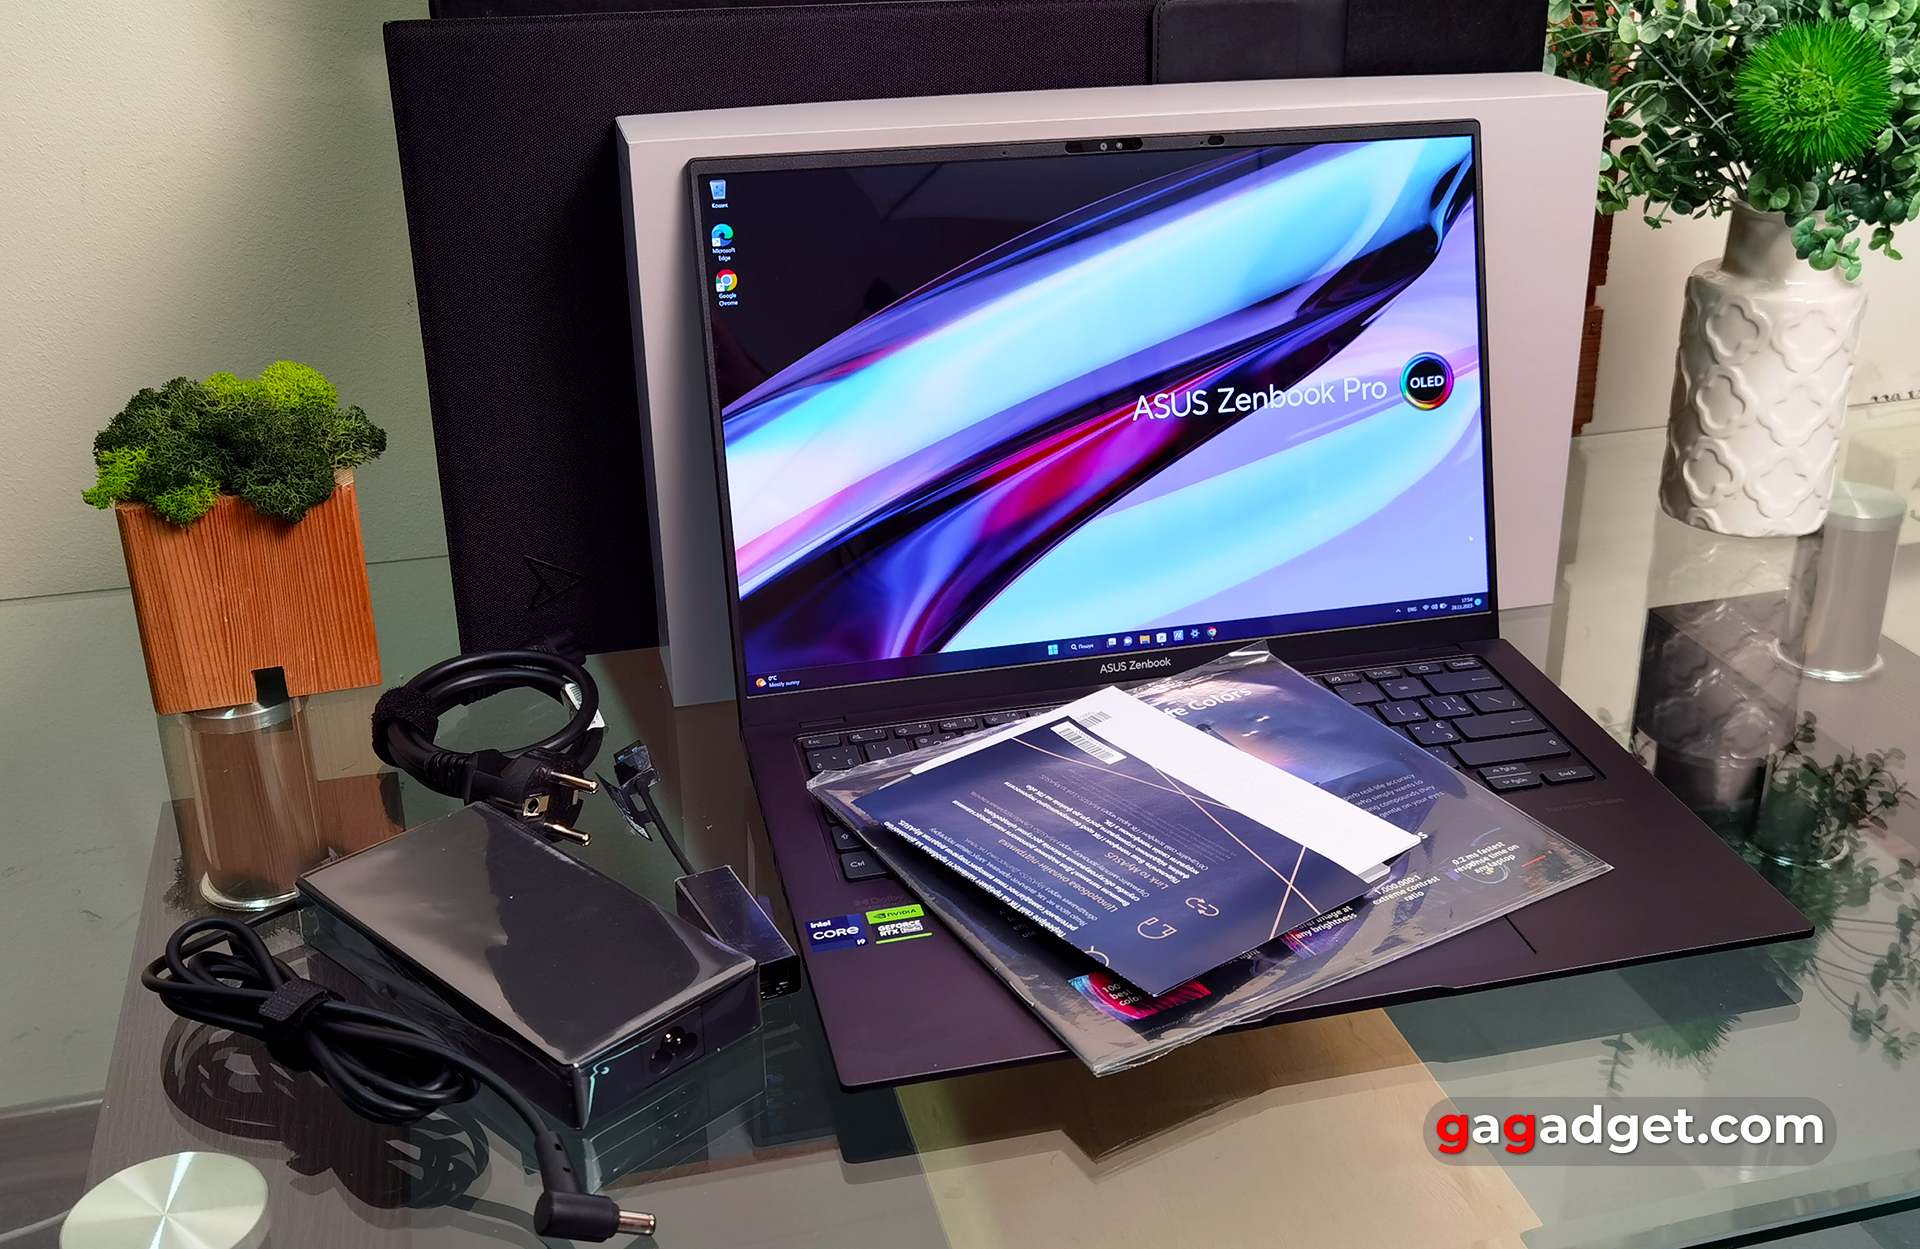 ASUS Zenbook Pro 14 OLED configuration